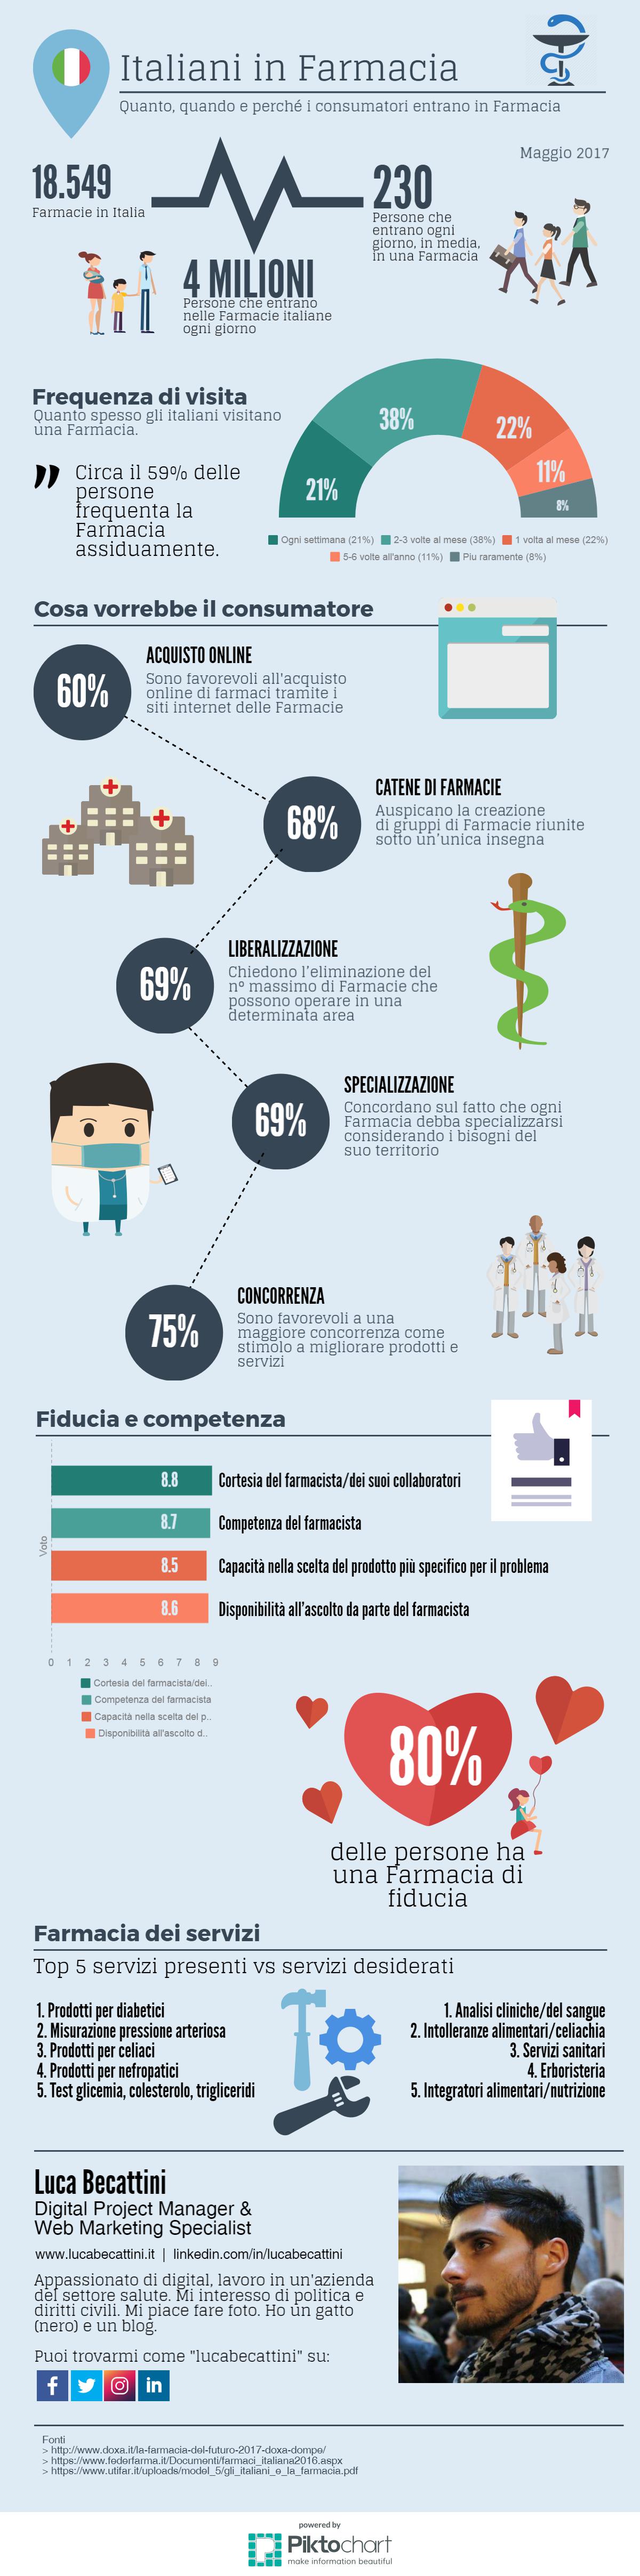 infografica-italiani-in-farmacia-2017